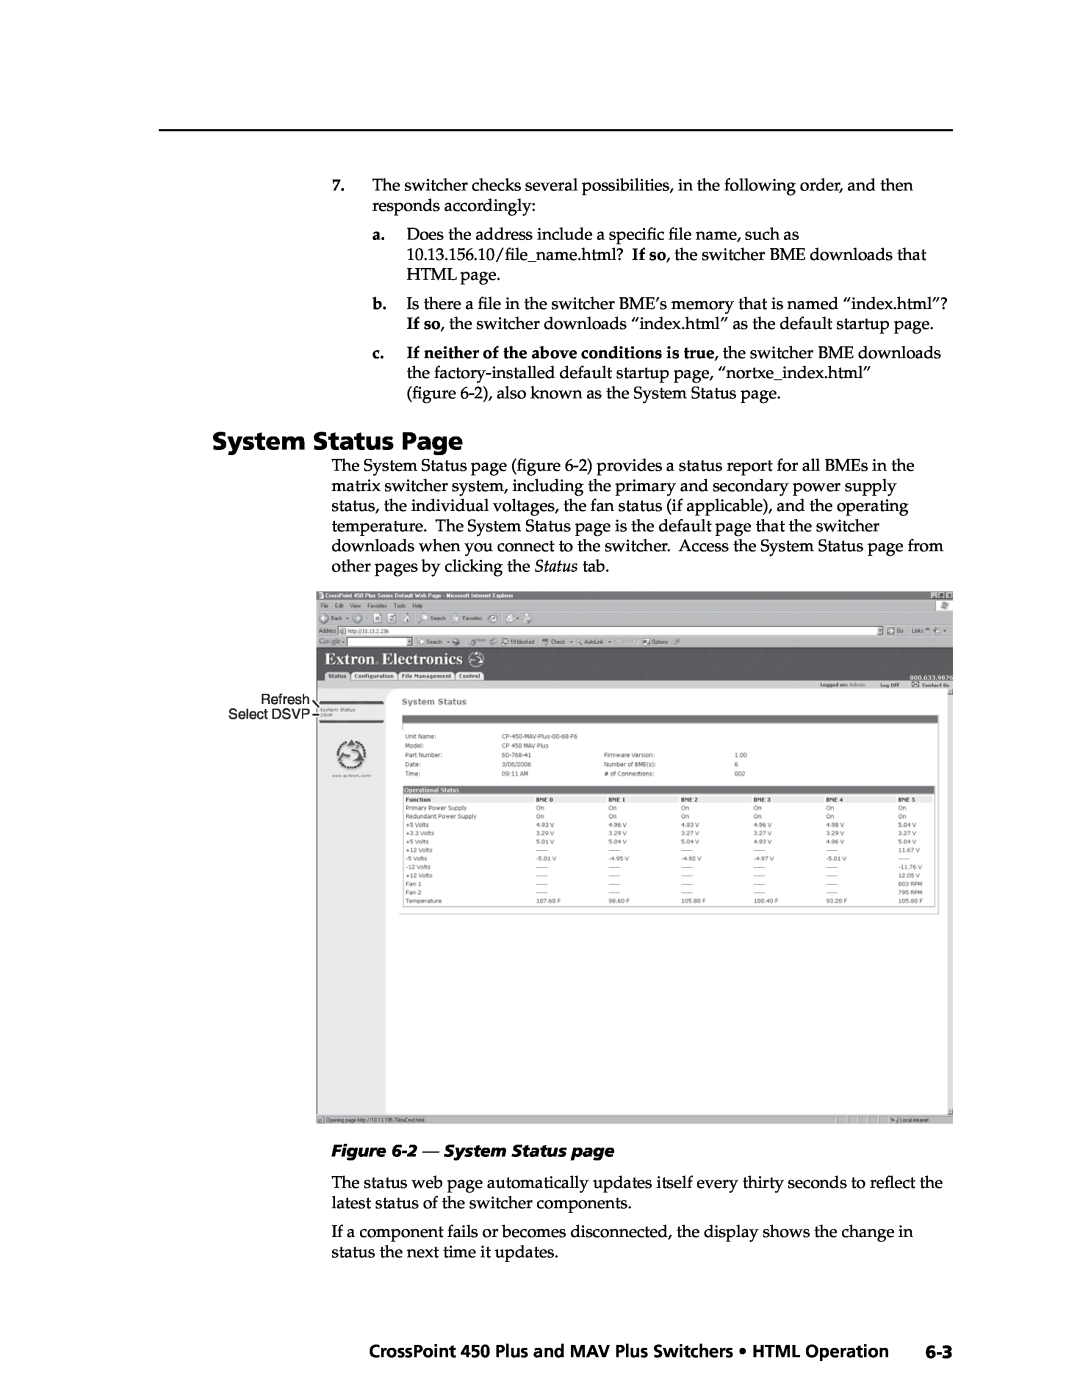 Extron electronic 450 Plus, MAV Plus manual System Status Page, 2 - System Status page 